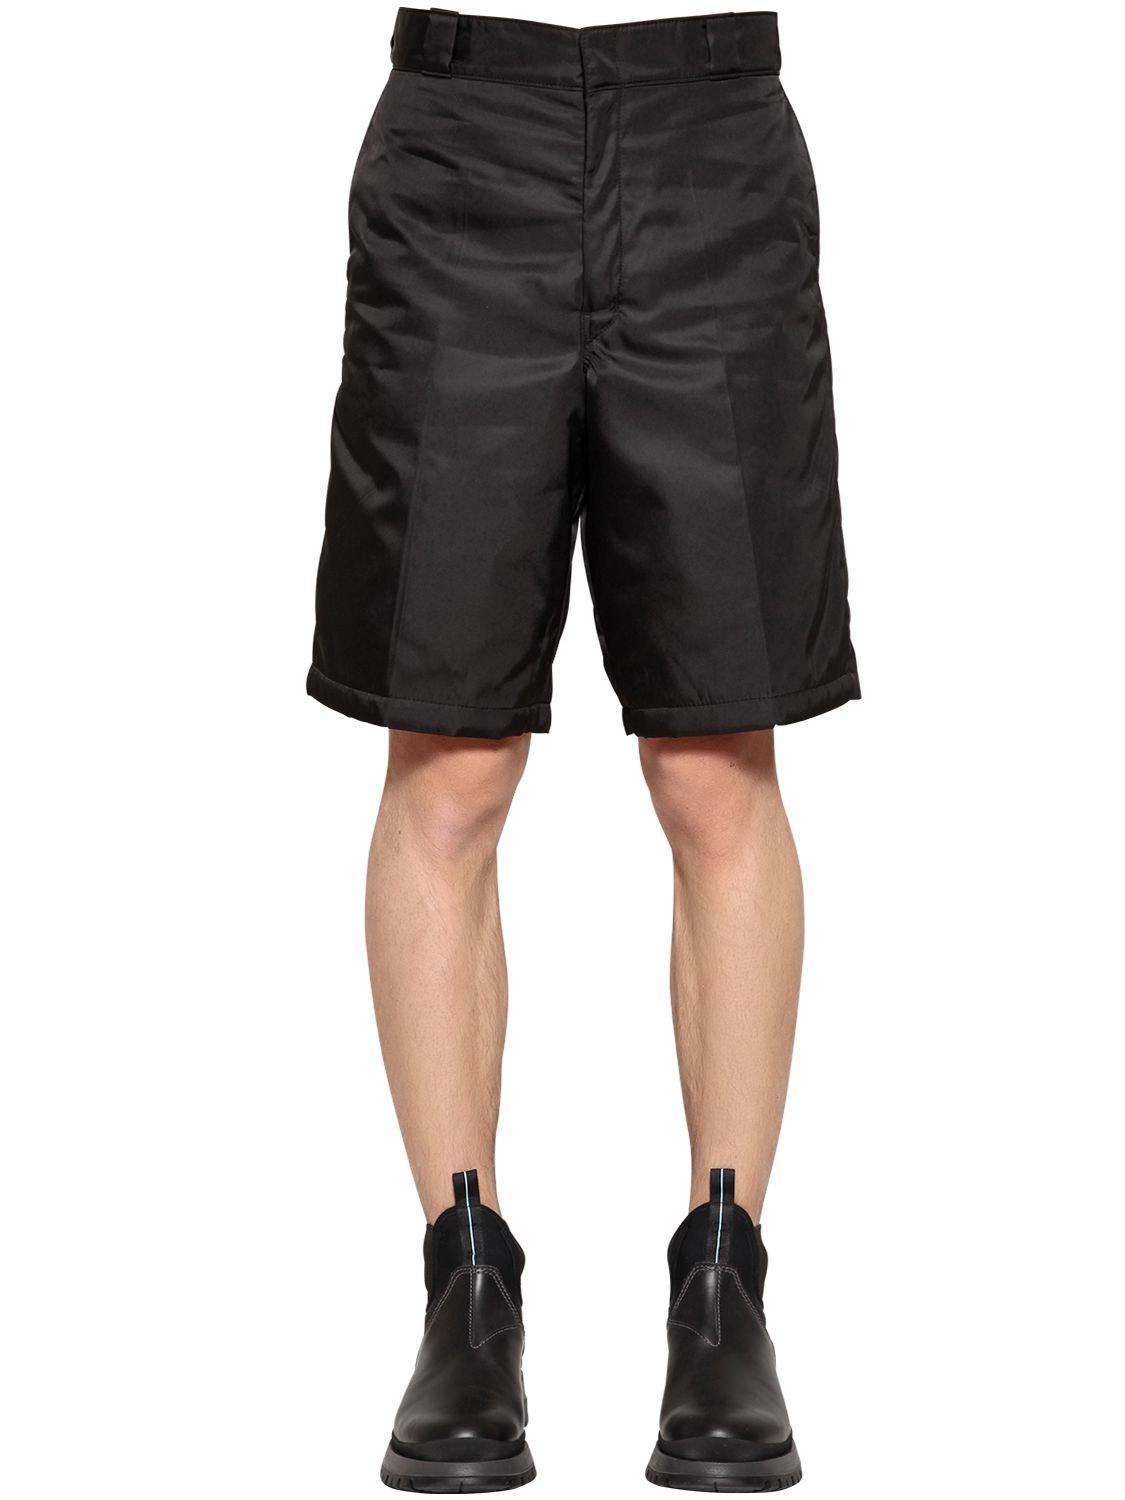 Prada Synthetic Nylon Gabardine Bermuda Shorts in Black for Men - Lyst